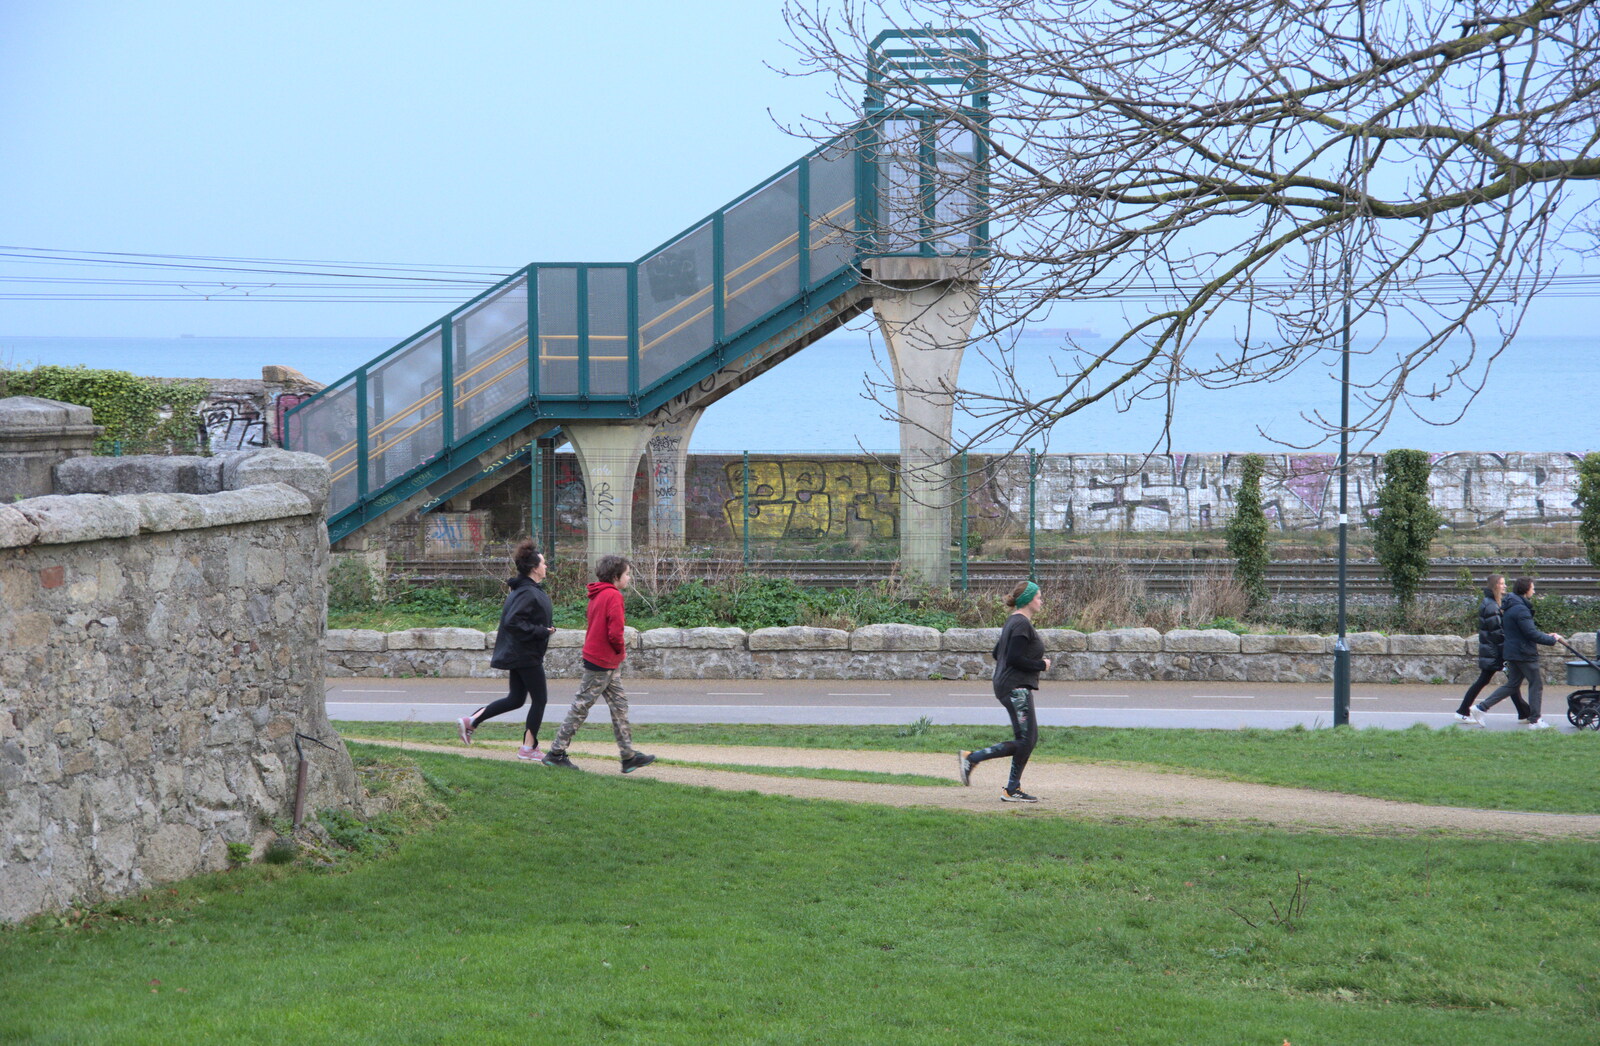 The End of the Breffni, Blackrock, Dublin - 18th February 2023: The runners head off through Blackrock Park